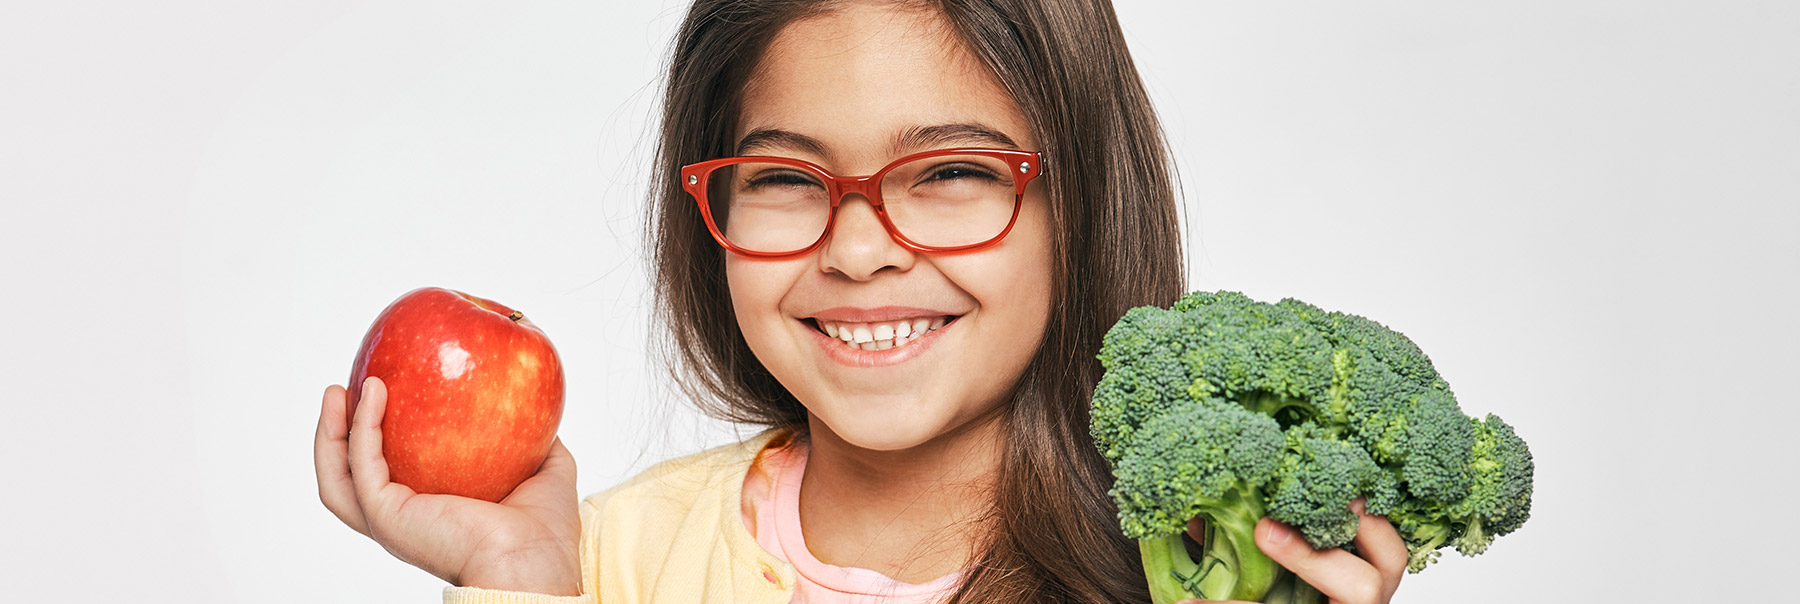 Cute young Hispanic girl holds tomato and broccoli